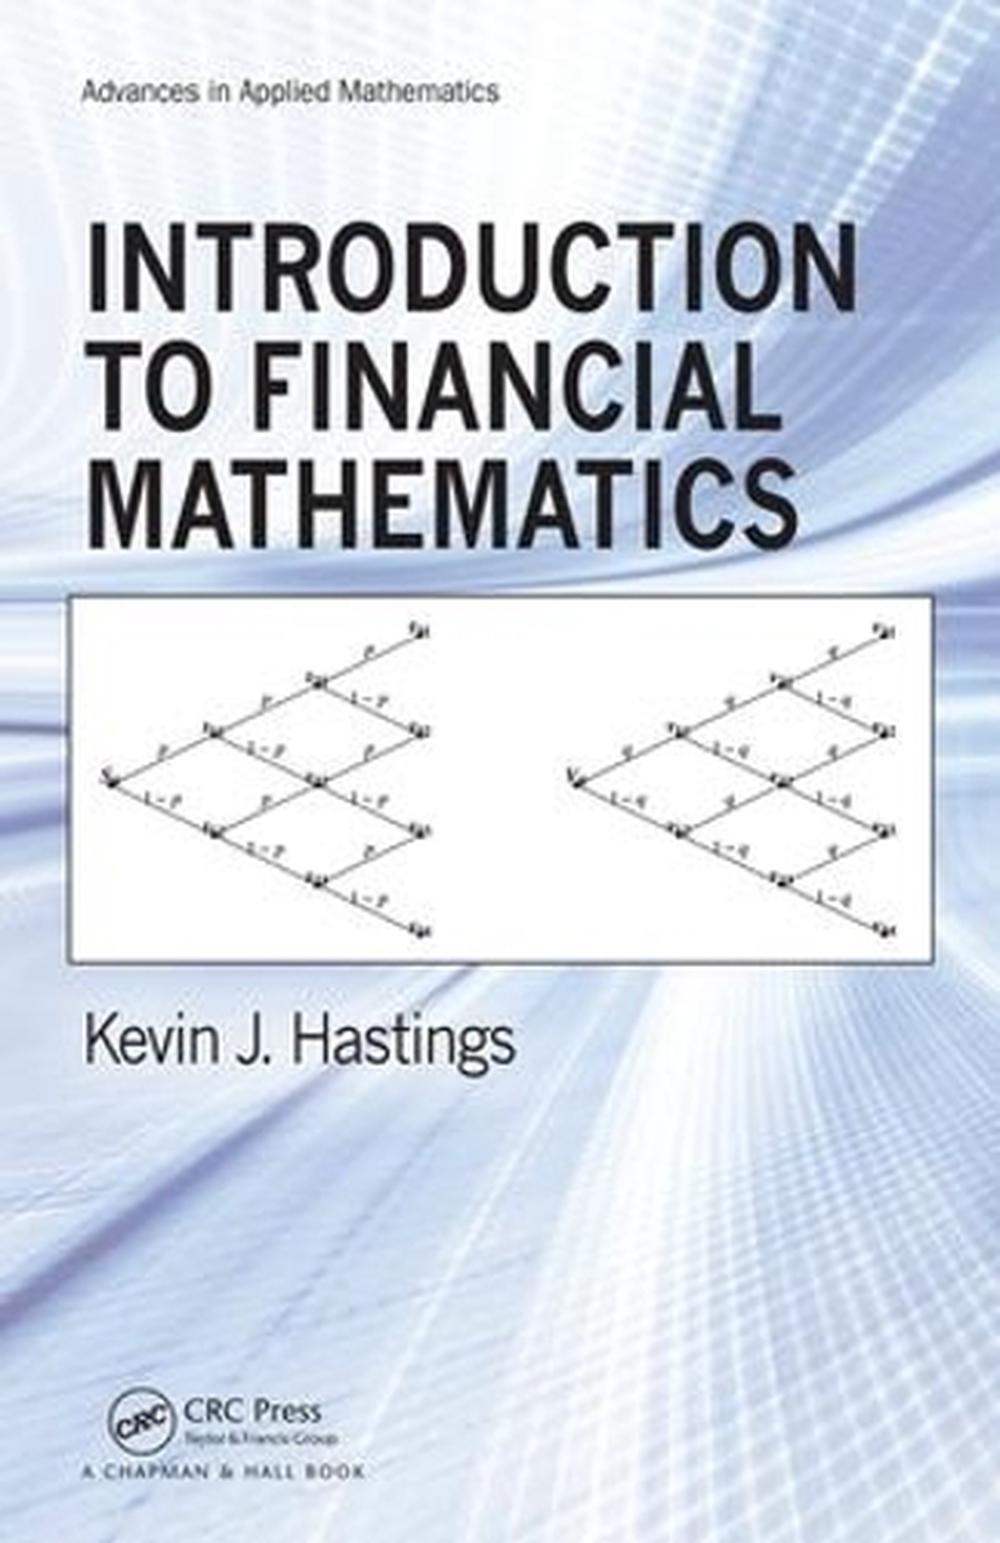 phd in financial mathematics usa